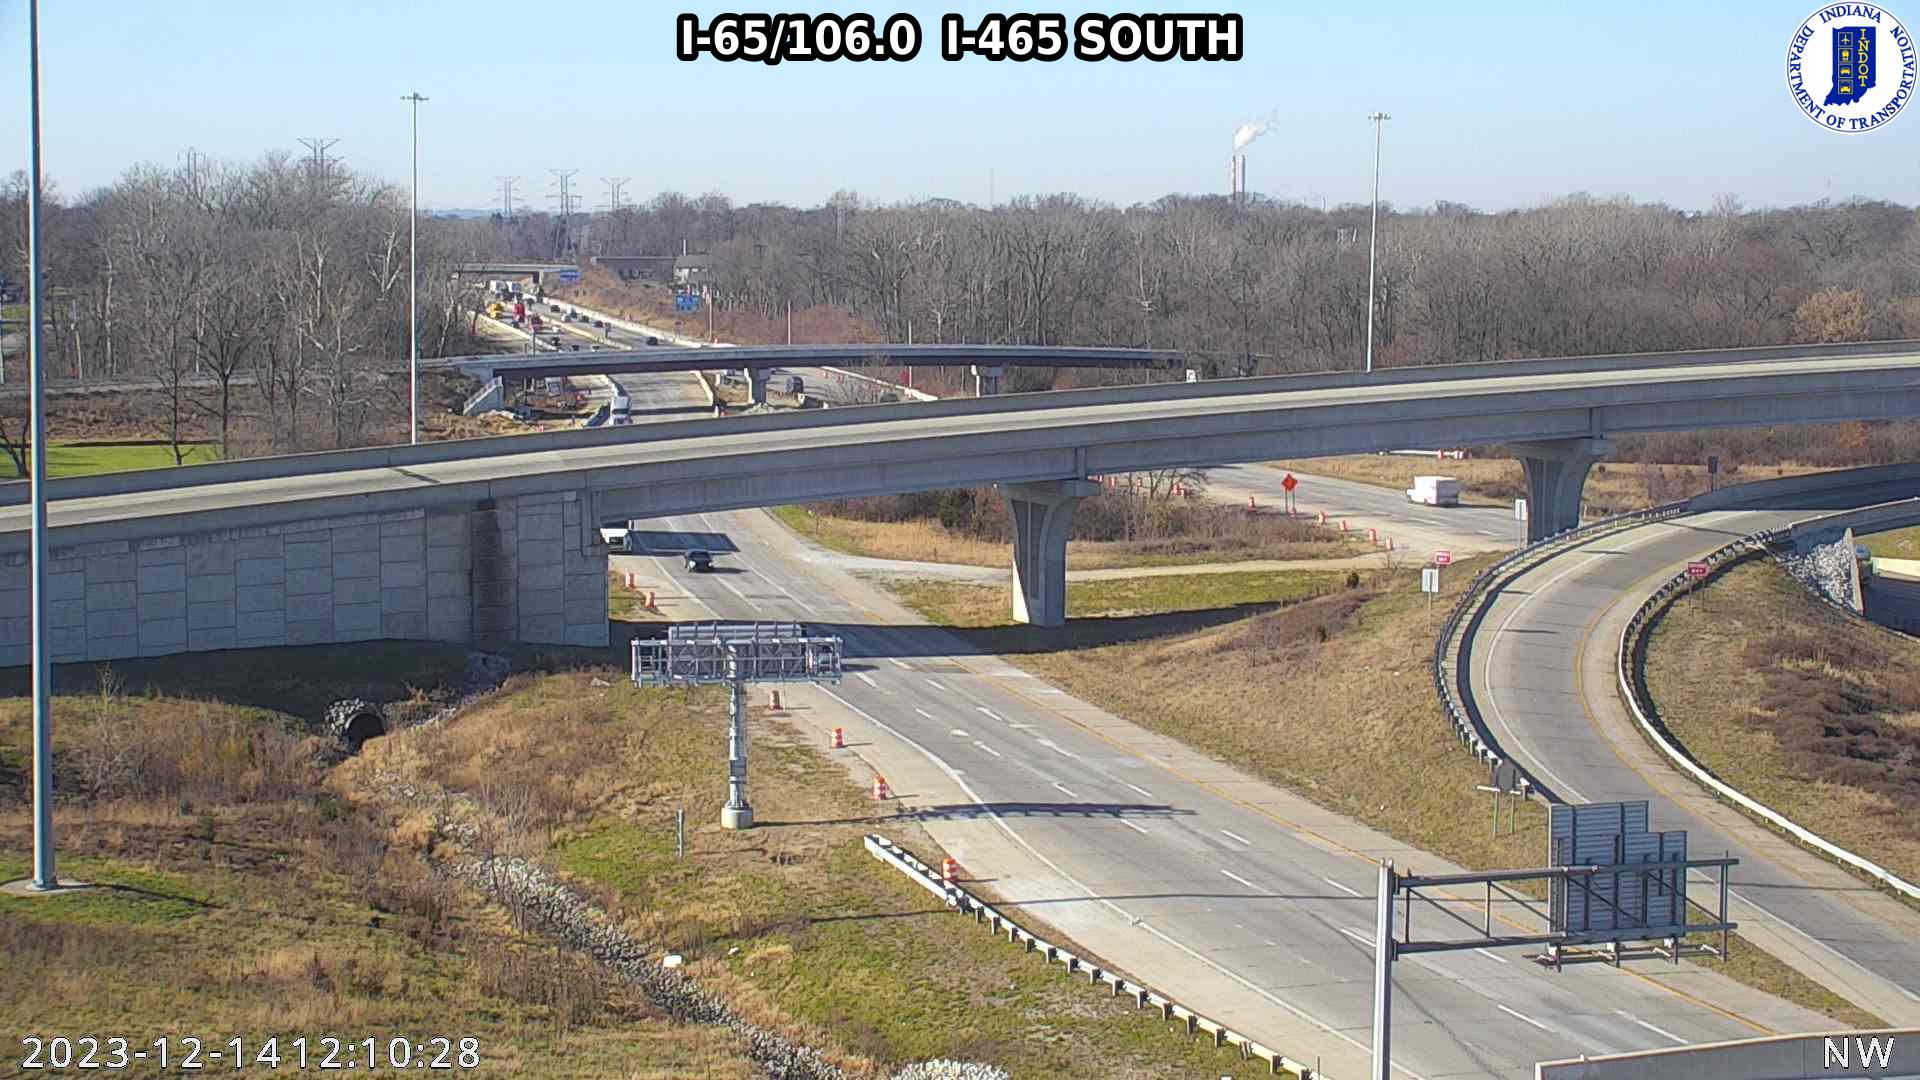 Traffic Cam Indianapolis: I-65: I-65/106.0 I-465 SOUTH : I-65/106.0 I-465 SOUTH Player